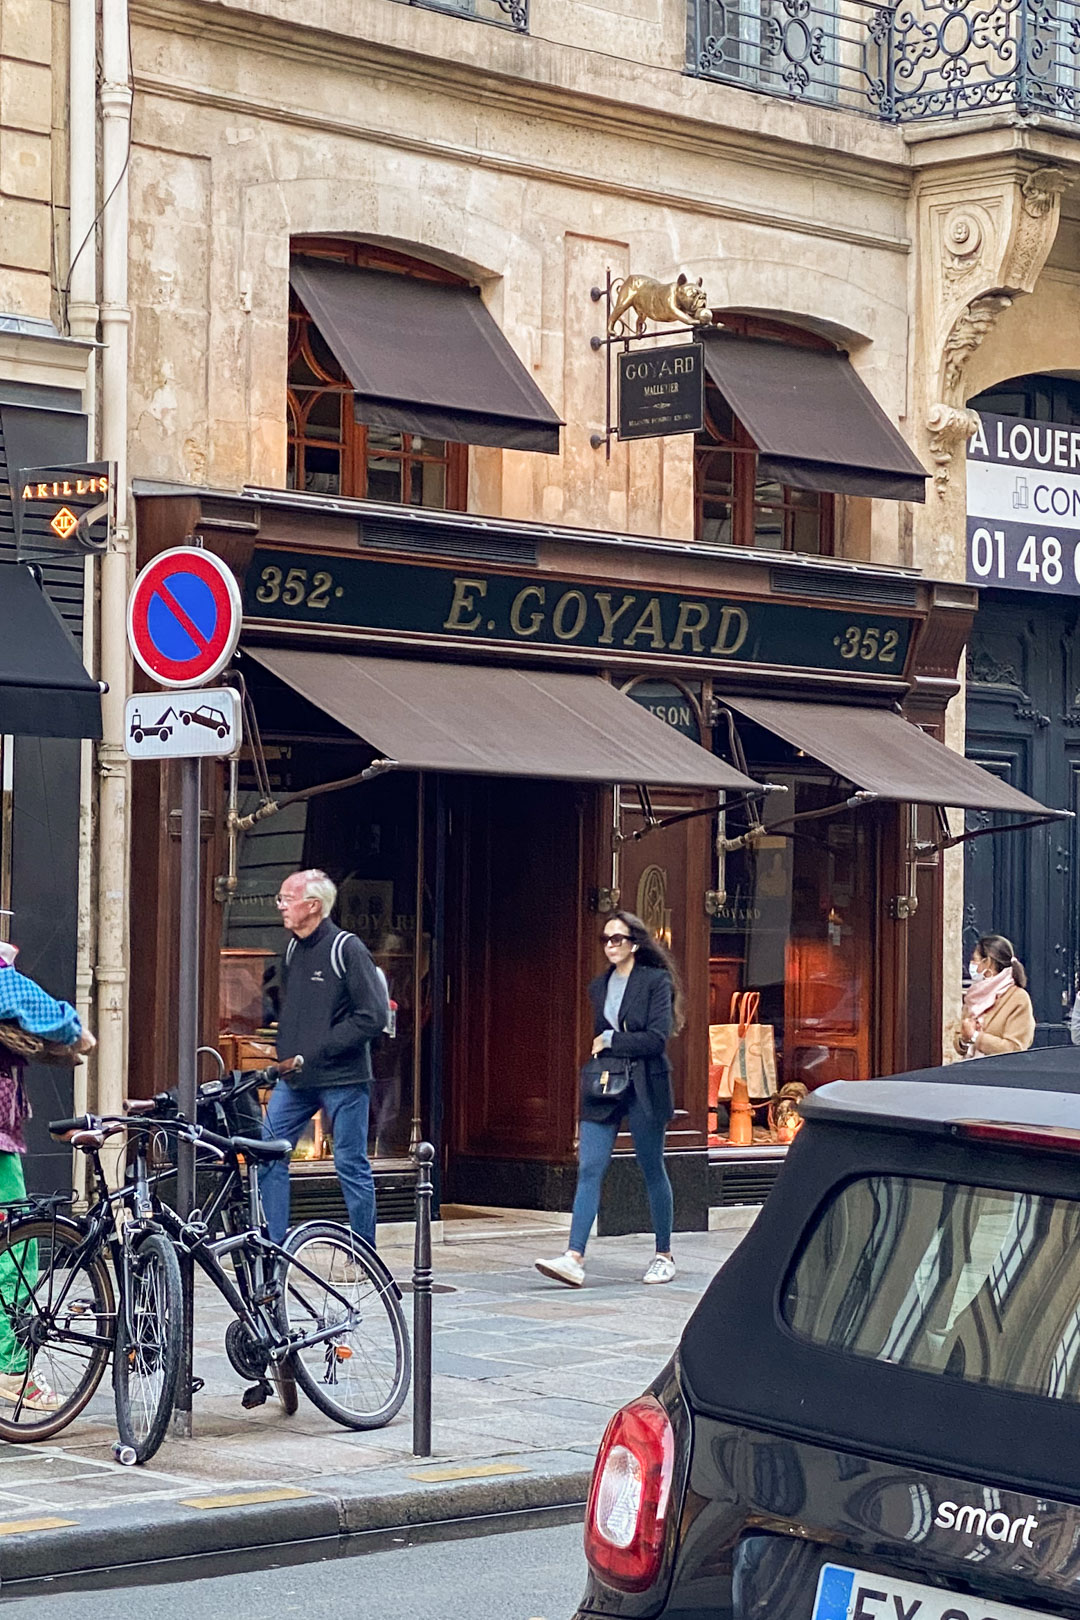 Goyard Artois Pm Price Hot Sale, SAVE 52% 